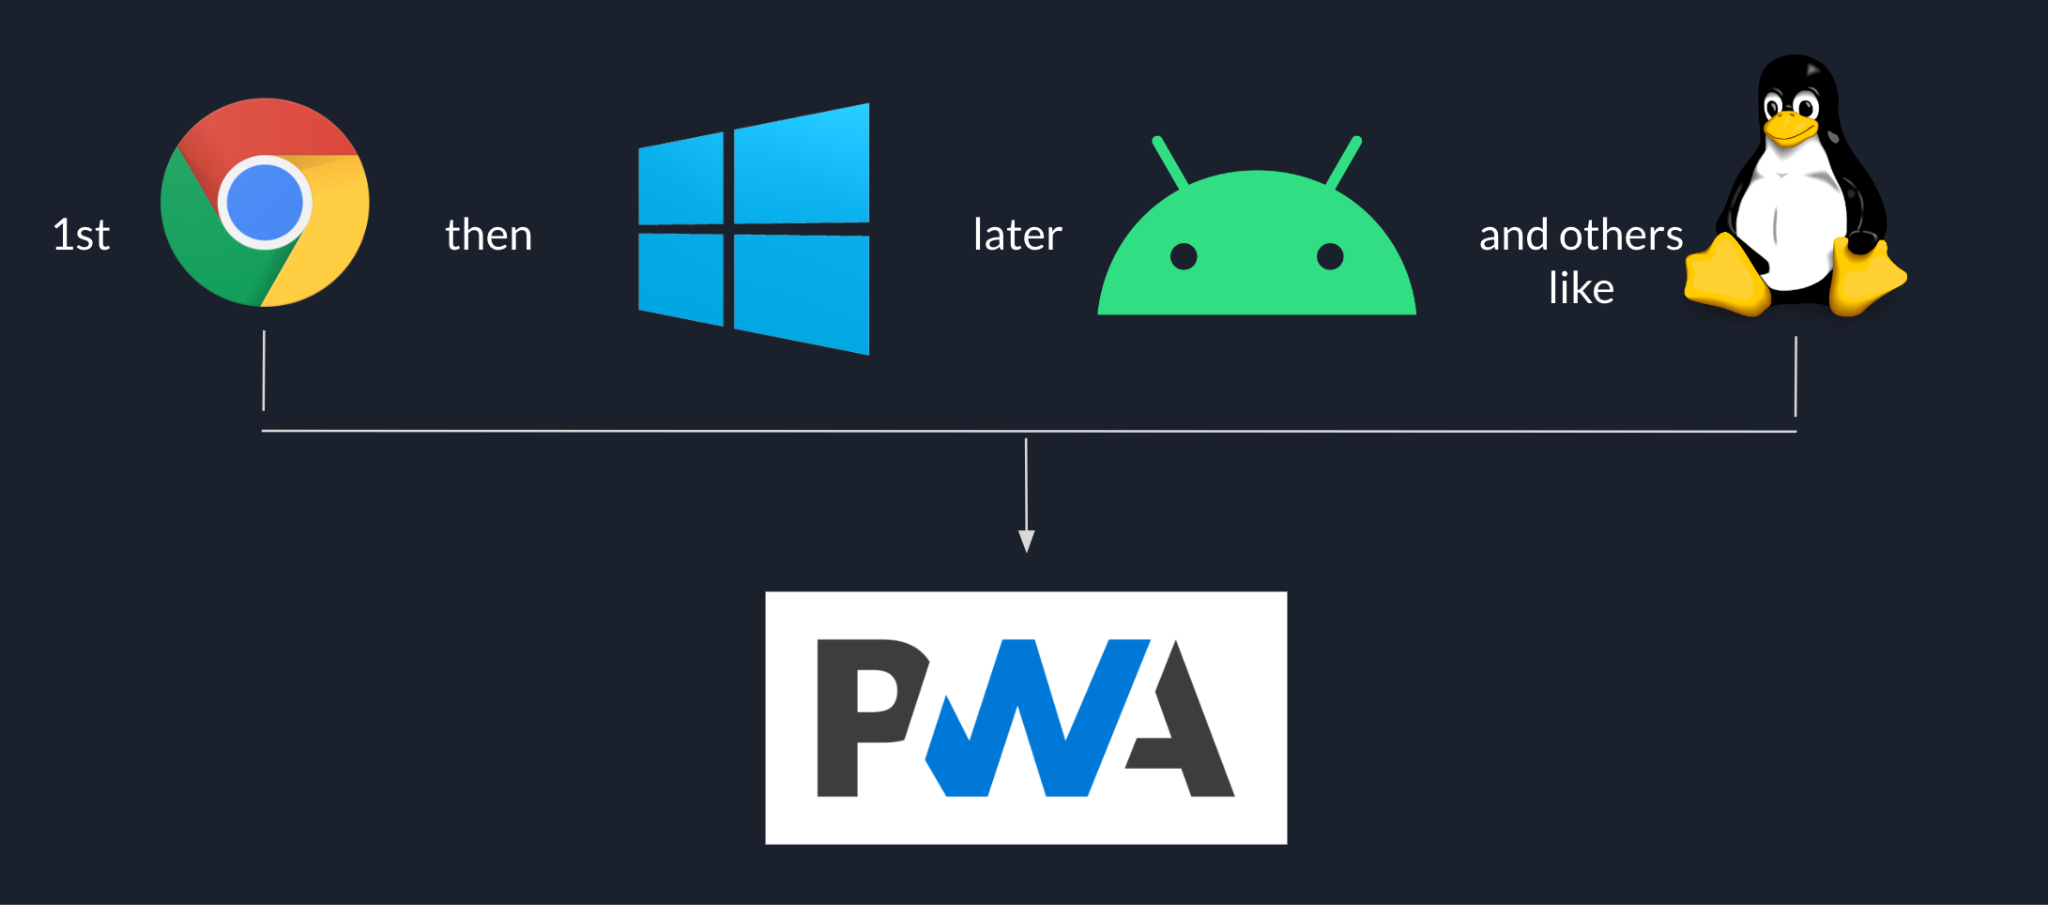 Goodnotes 출시 순서는 Chrome부터 Windows, Android 및 마지막에 Linux와 같은 기타 플랫폼으로 시작되며 모두 PWA를 기반으로 합니다.